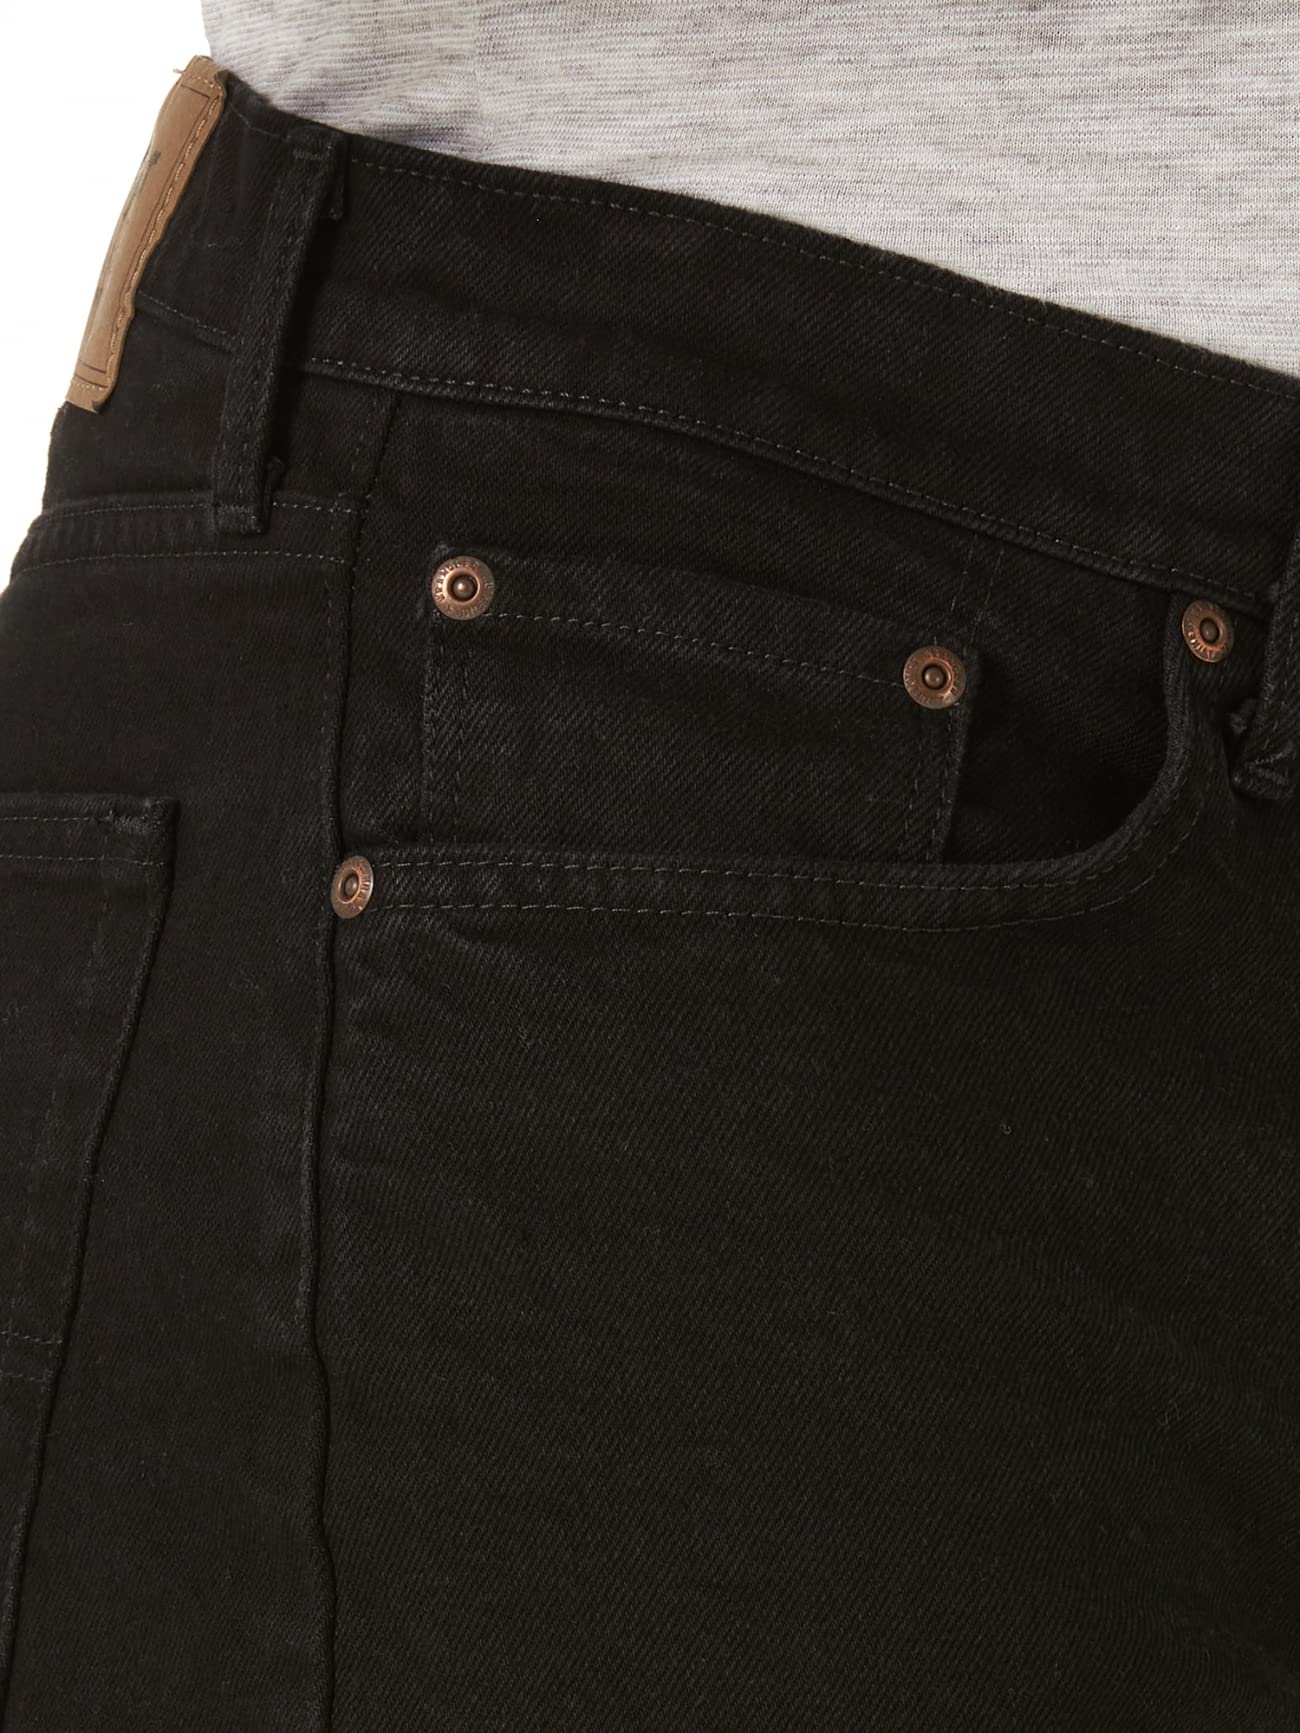 Wrangler Authentics Men's Classic Relaxed Fit Five Pocket Jean Short, Jet Black, 40